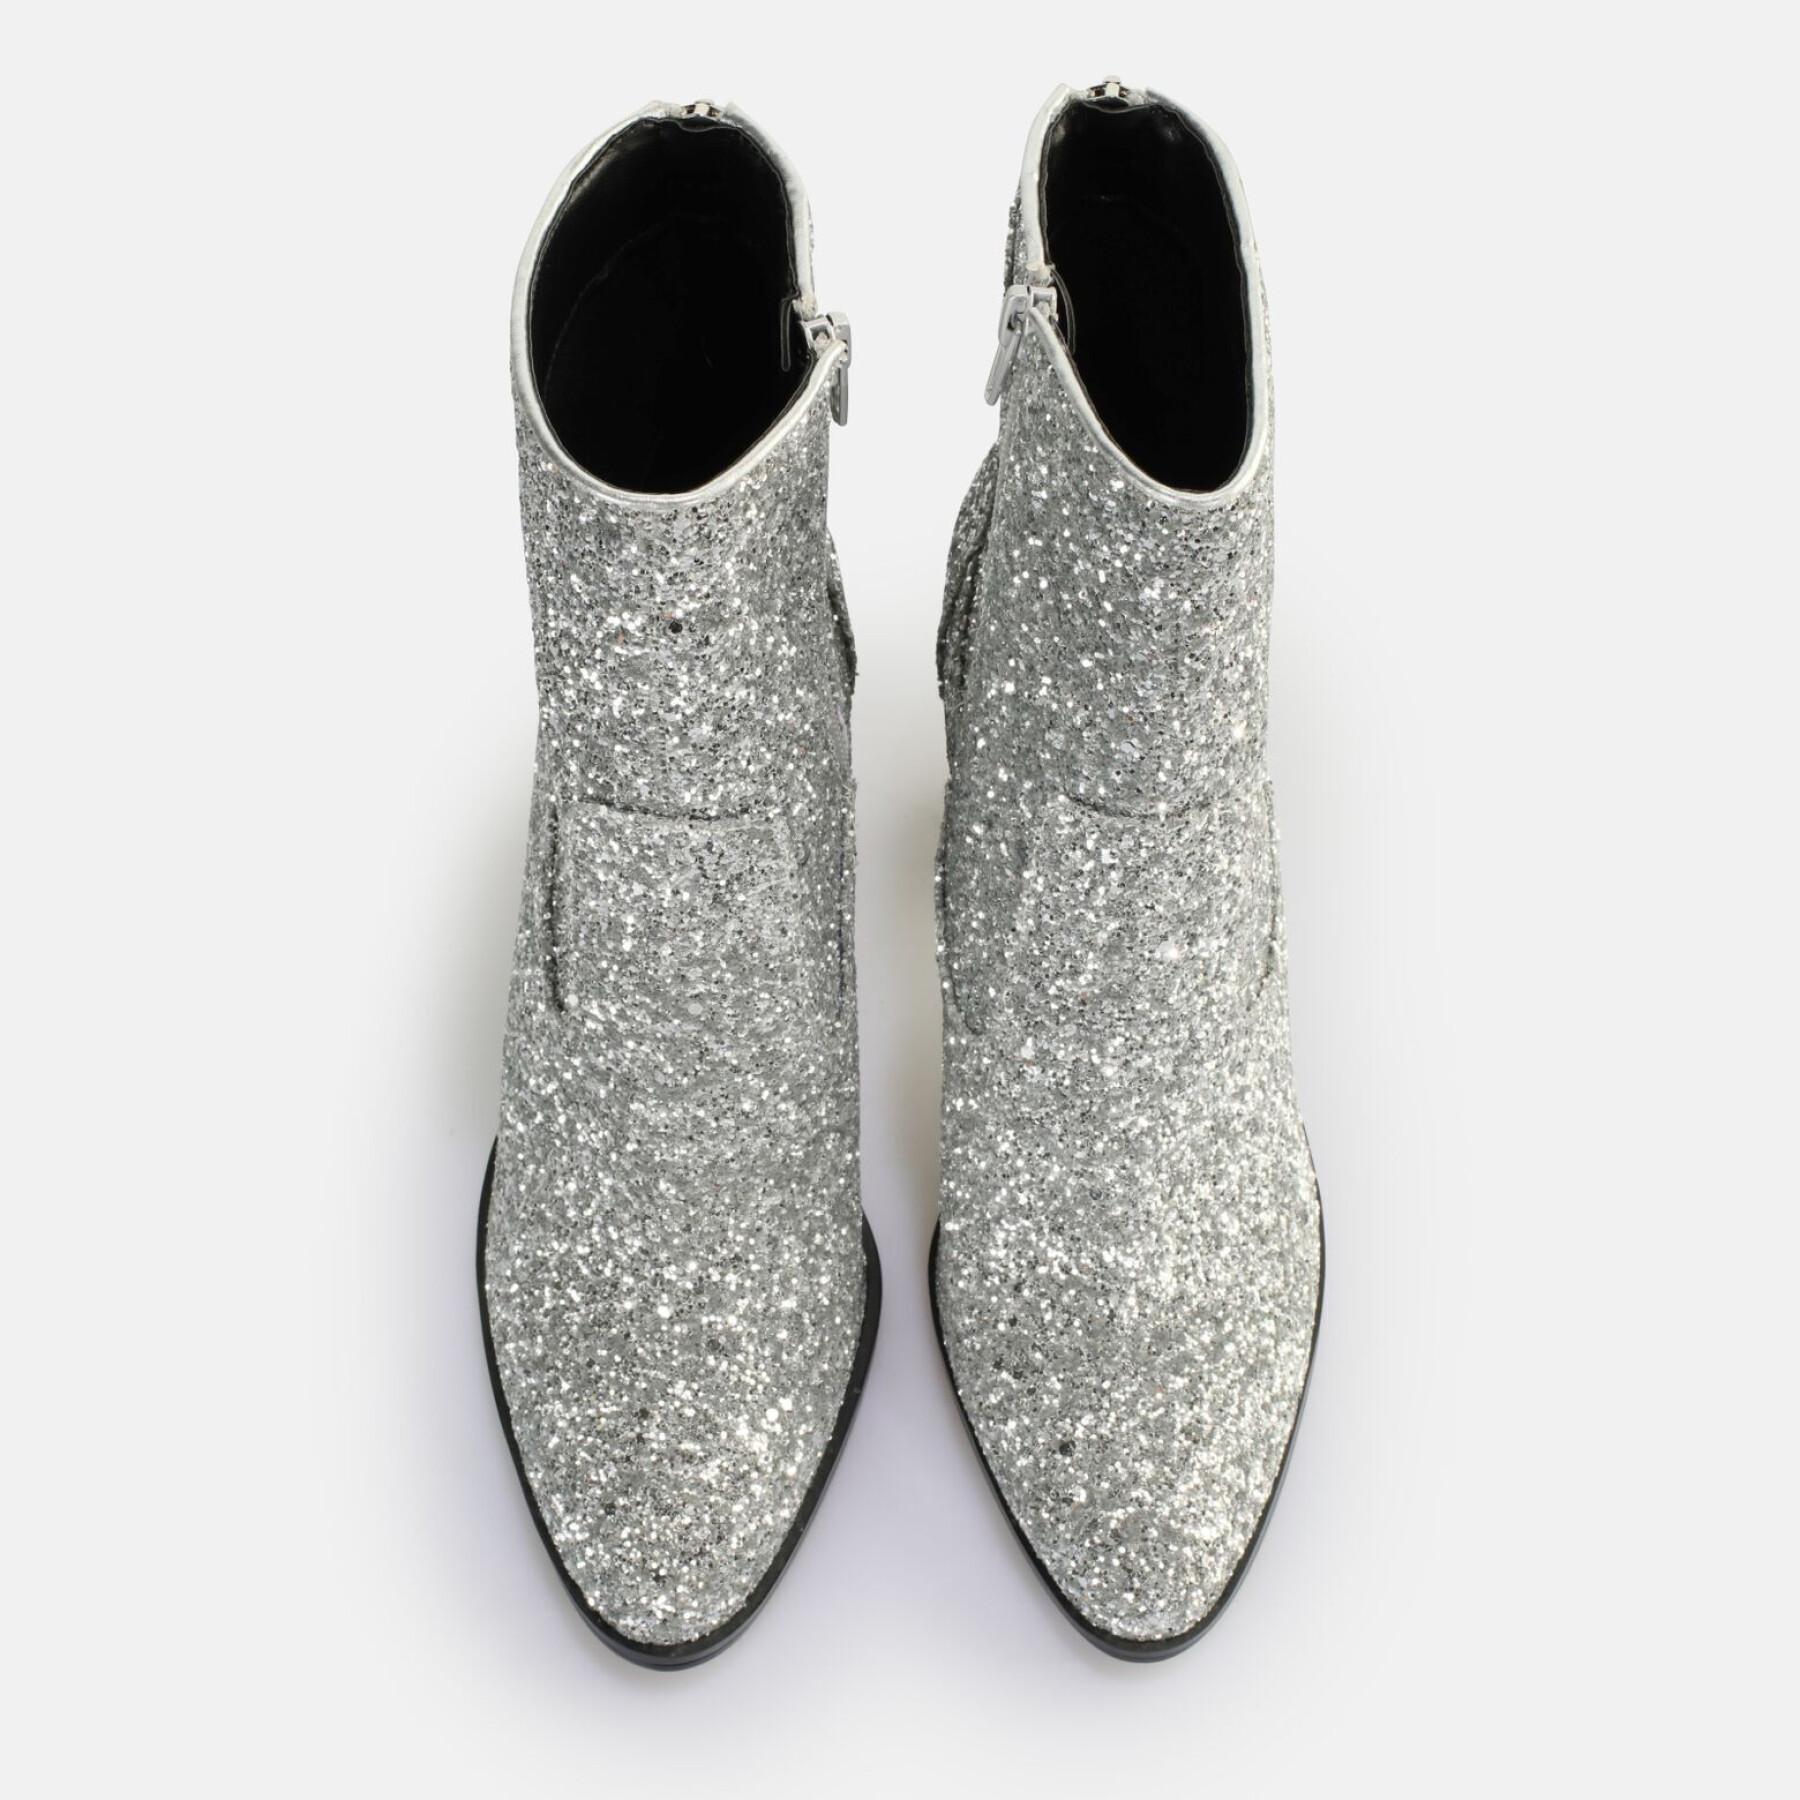 Women's glitter boots Buffalo Zoe